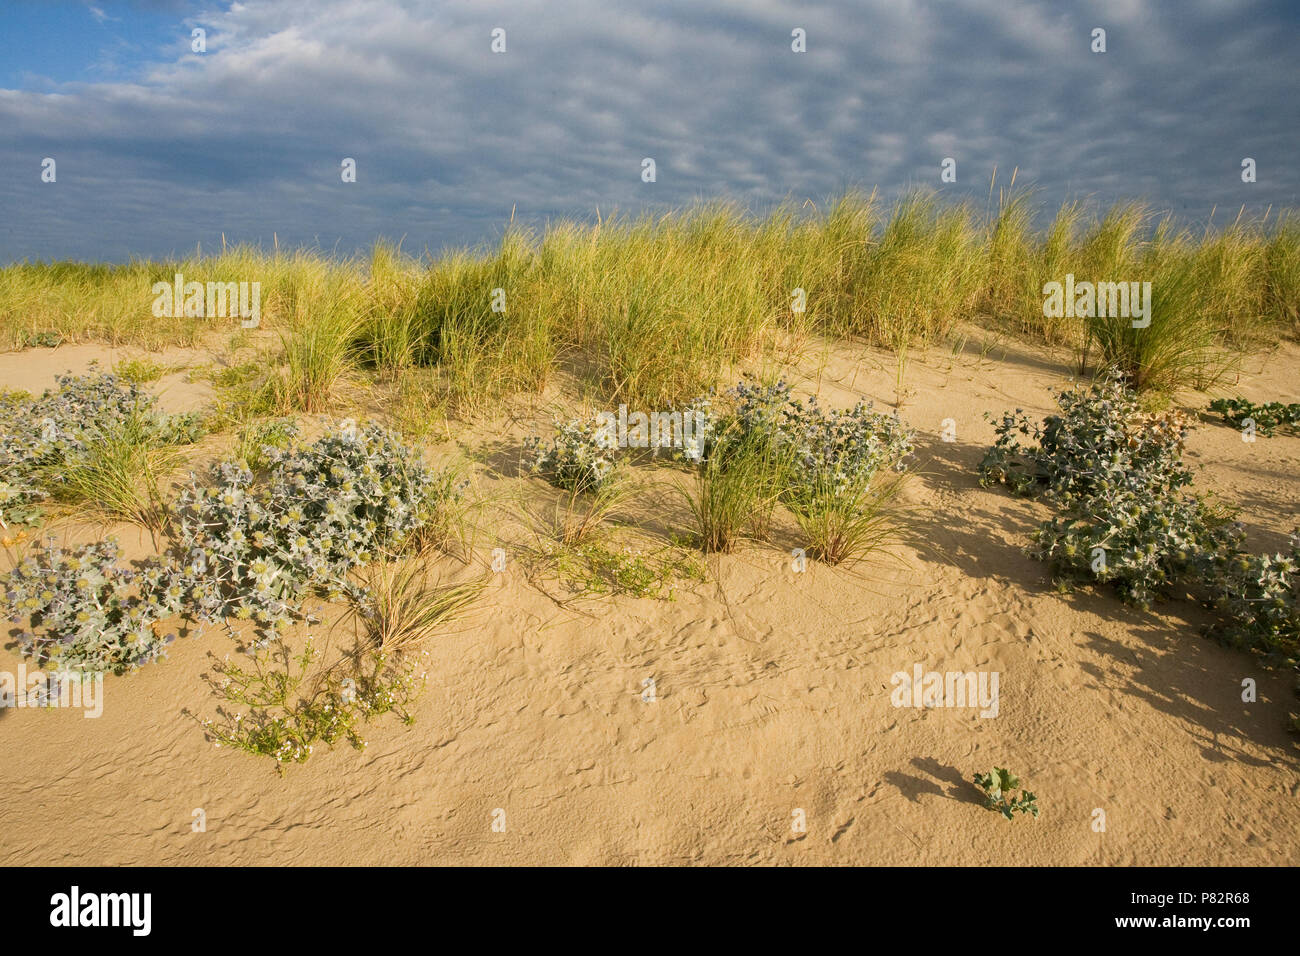 Blauwe Zeedistel in de zeereep; Sea Holly in coastal dunes Stock Photo